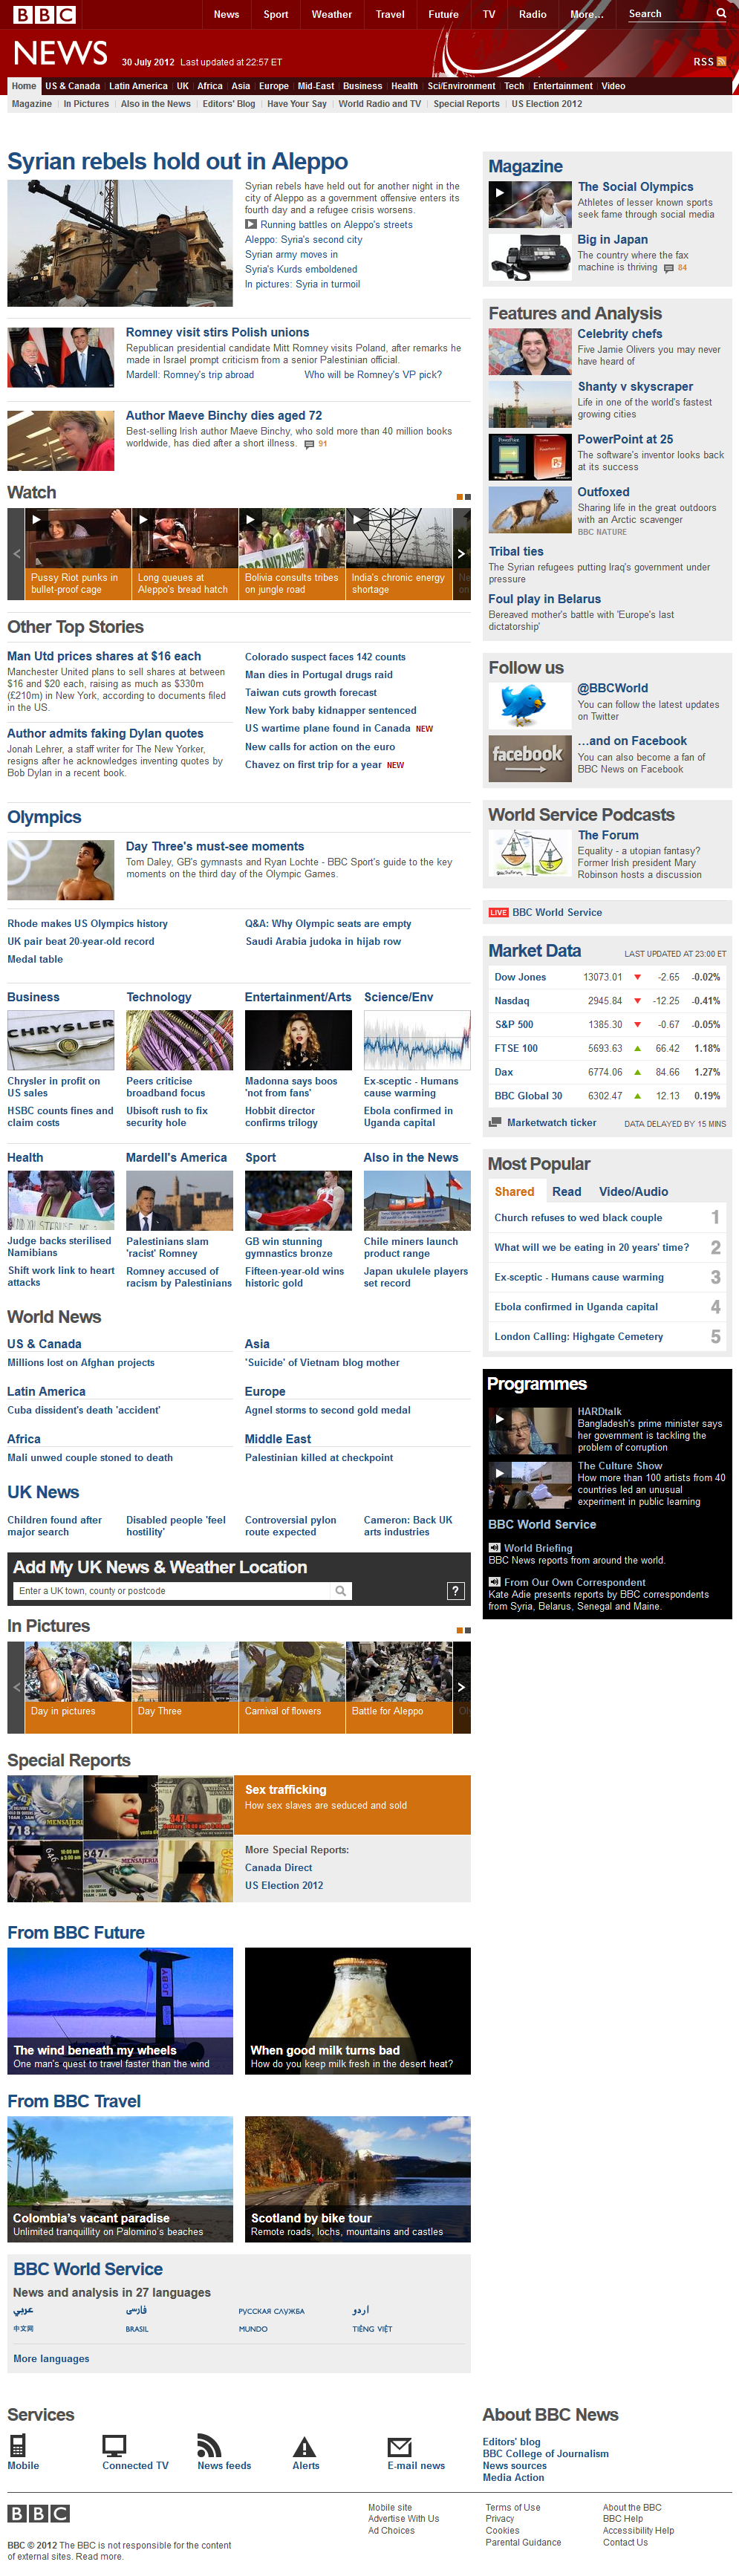 BBC News website in 2012